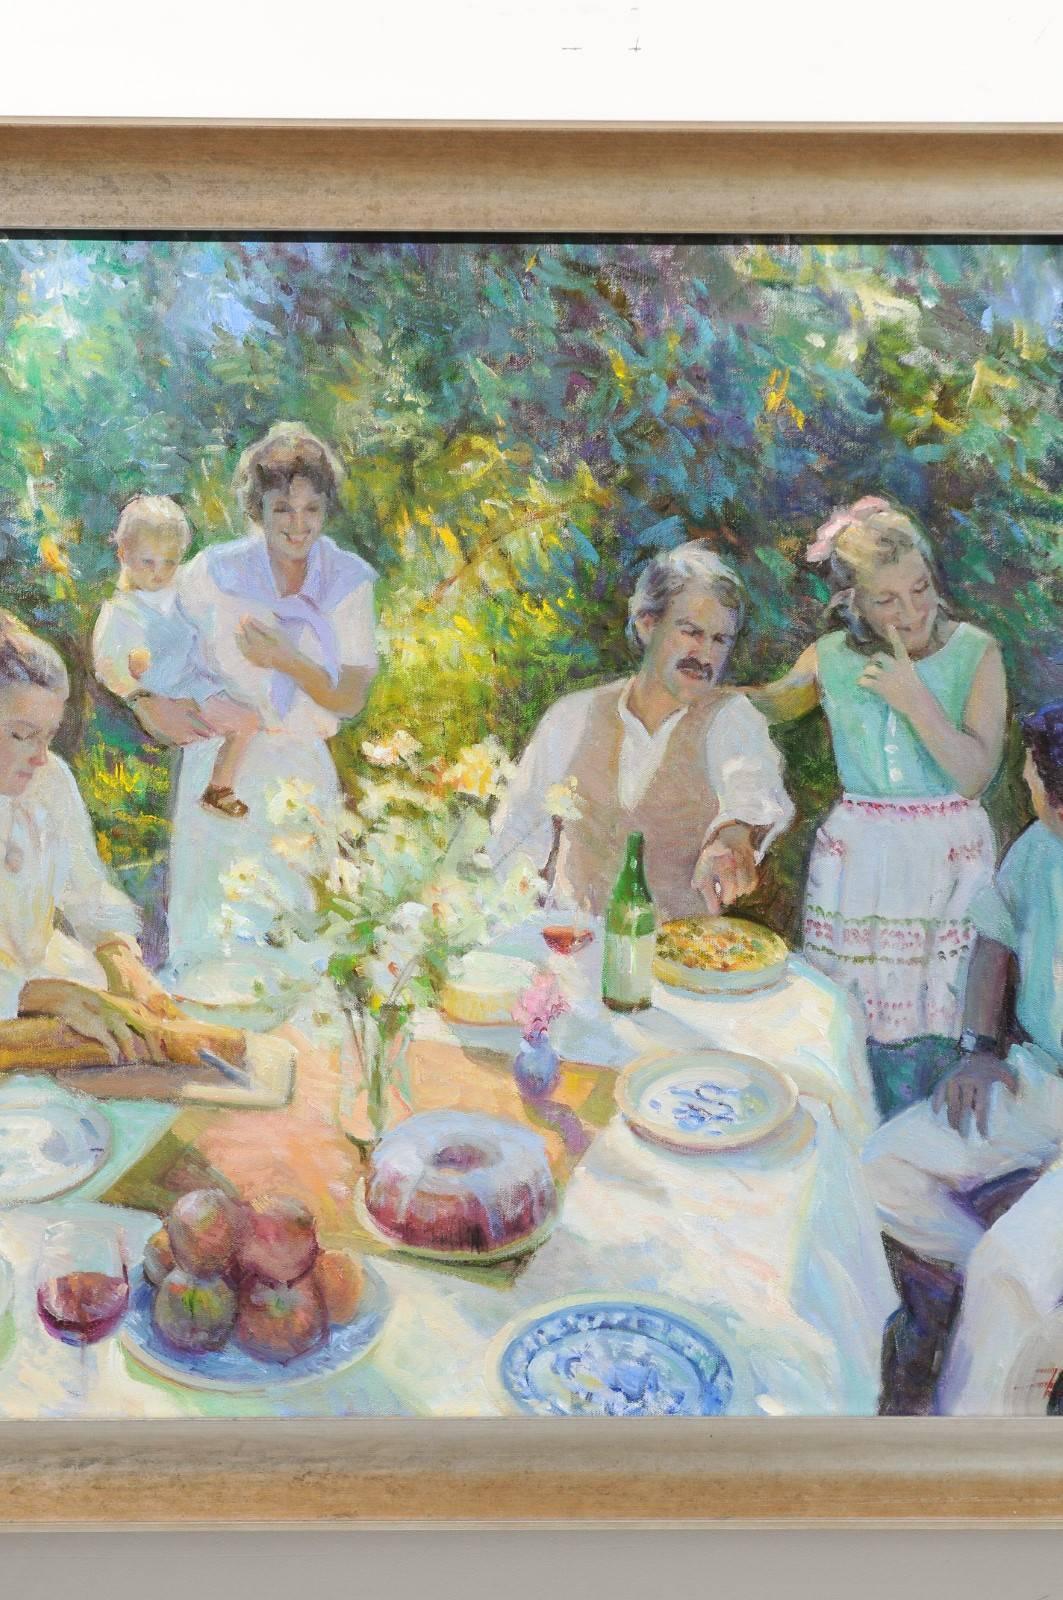 Family Joy, Don Hatfield Contemporary Framed Garden Oil on Linen Painting LiL 4